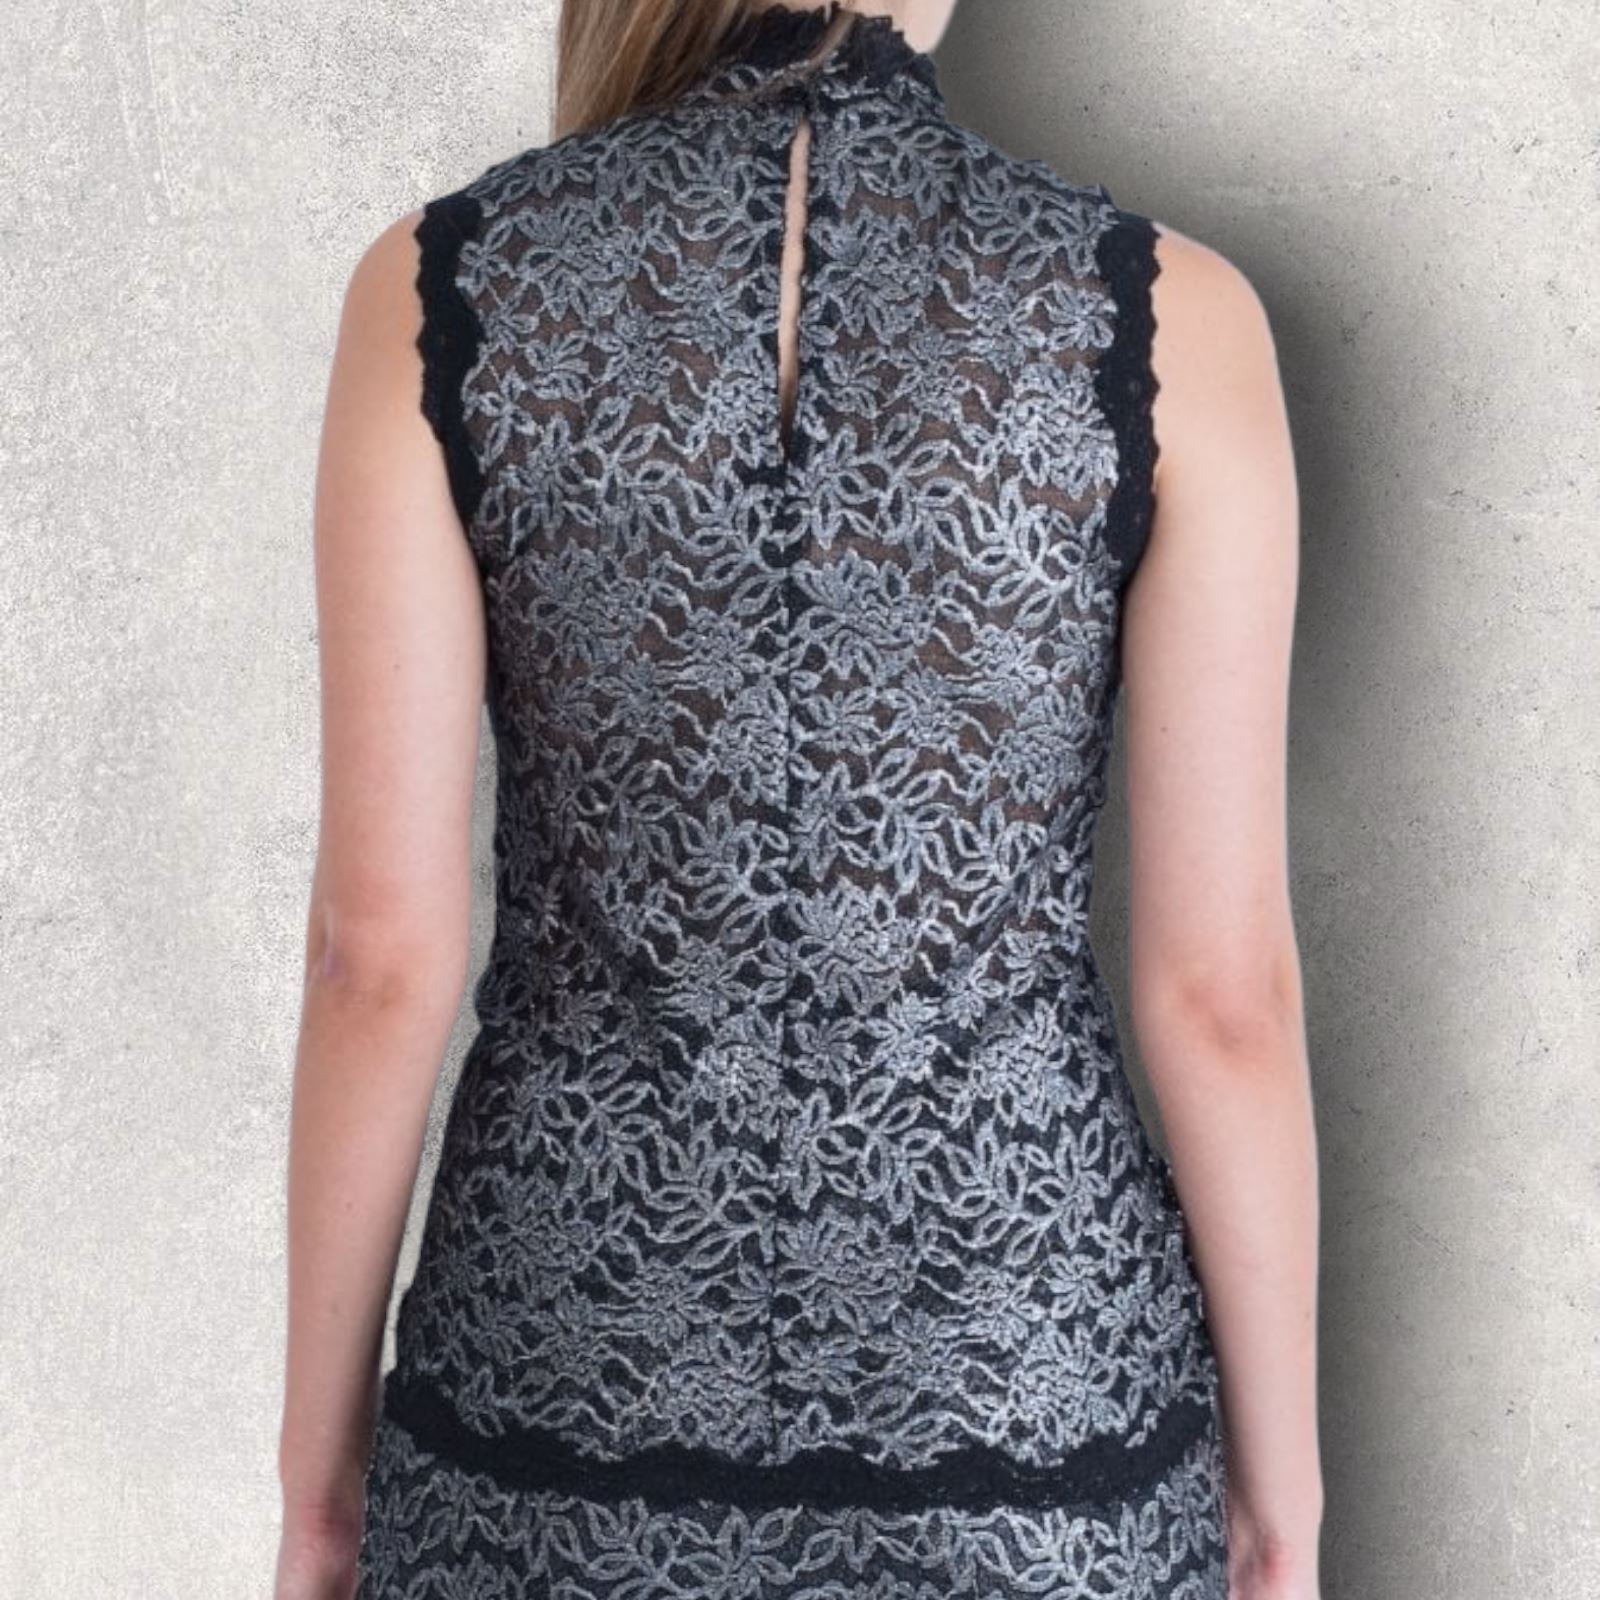 ROSEMUNDE Black & Silver Metallic Sleeveless Lace Top Size S UK 10 US 6 EU 38 RRP £69 Timeless Fashions